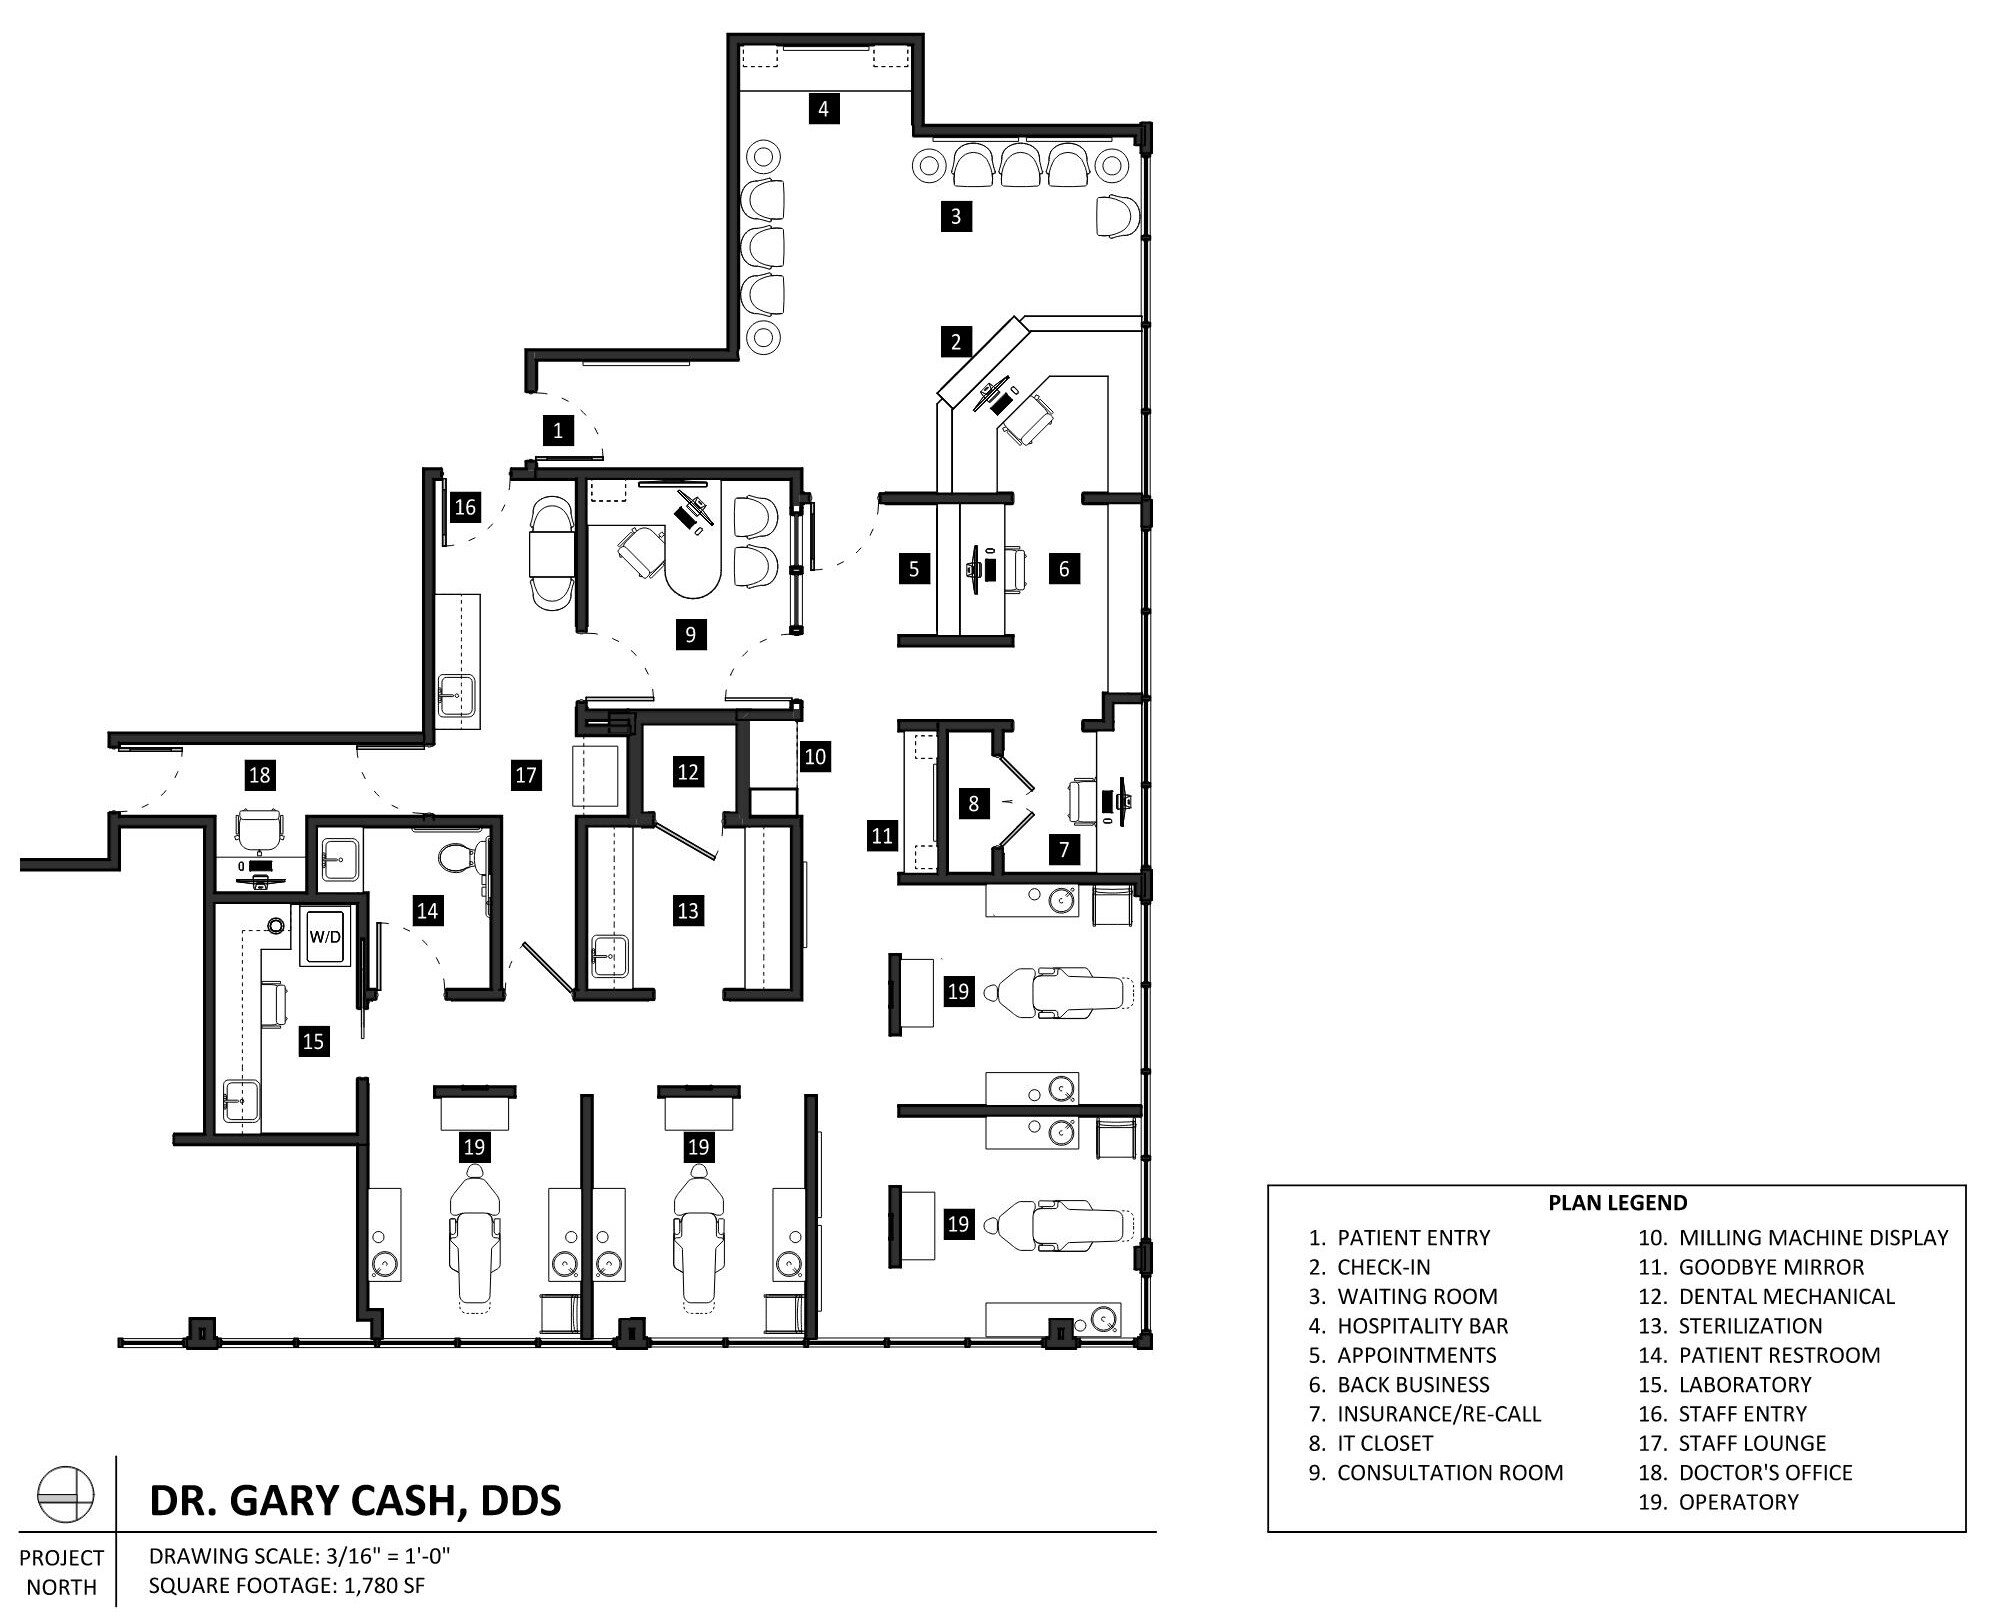 Cash_ADA Design Competition Floor Plans Page 001.jpg